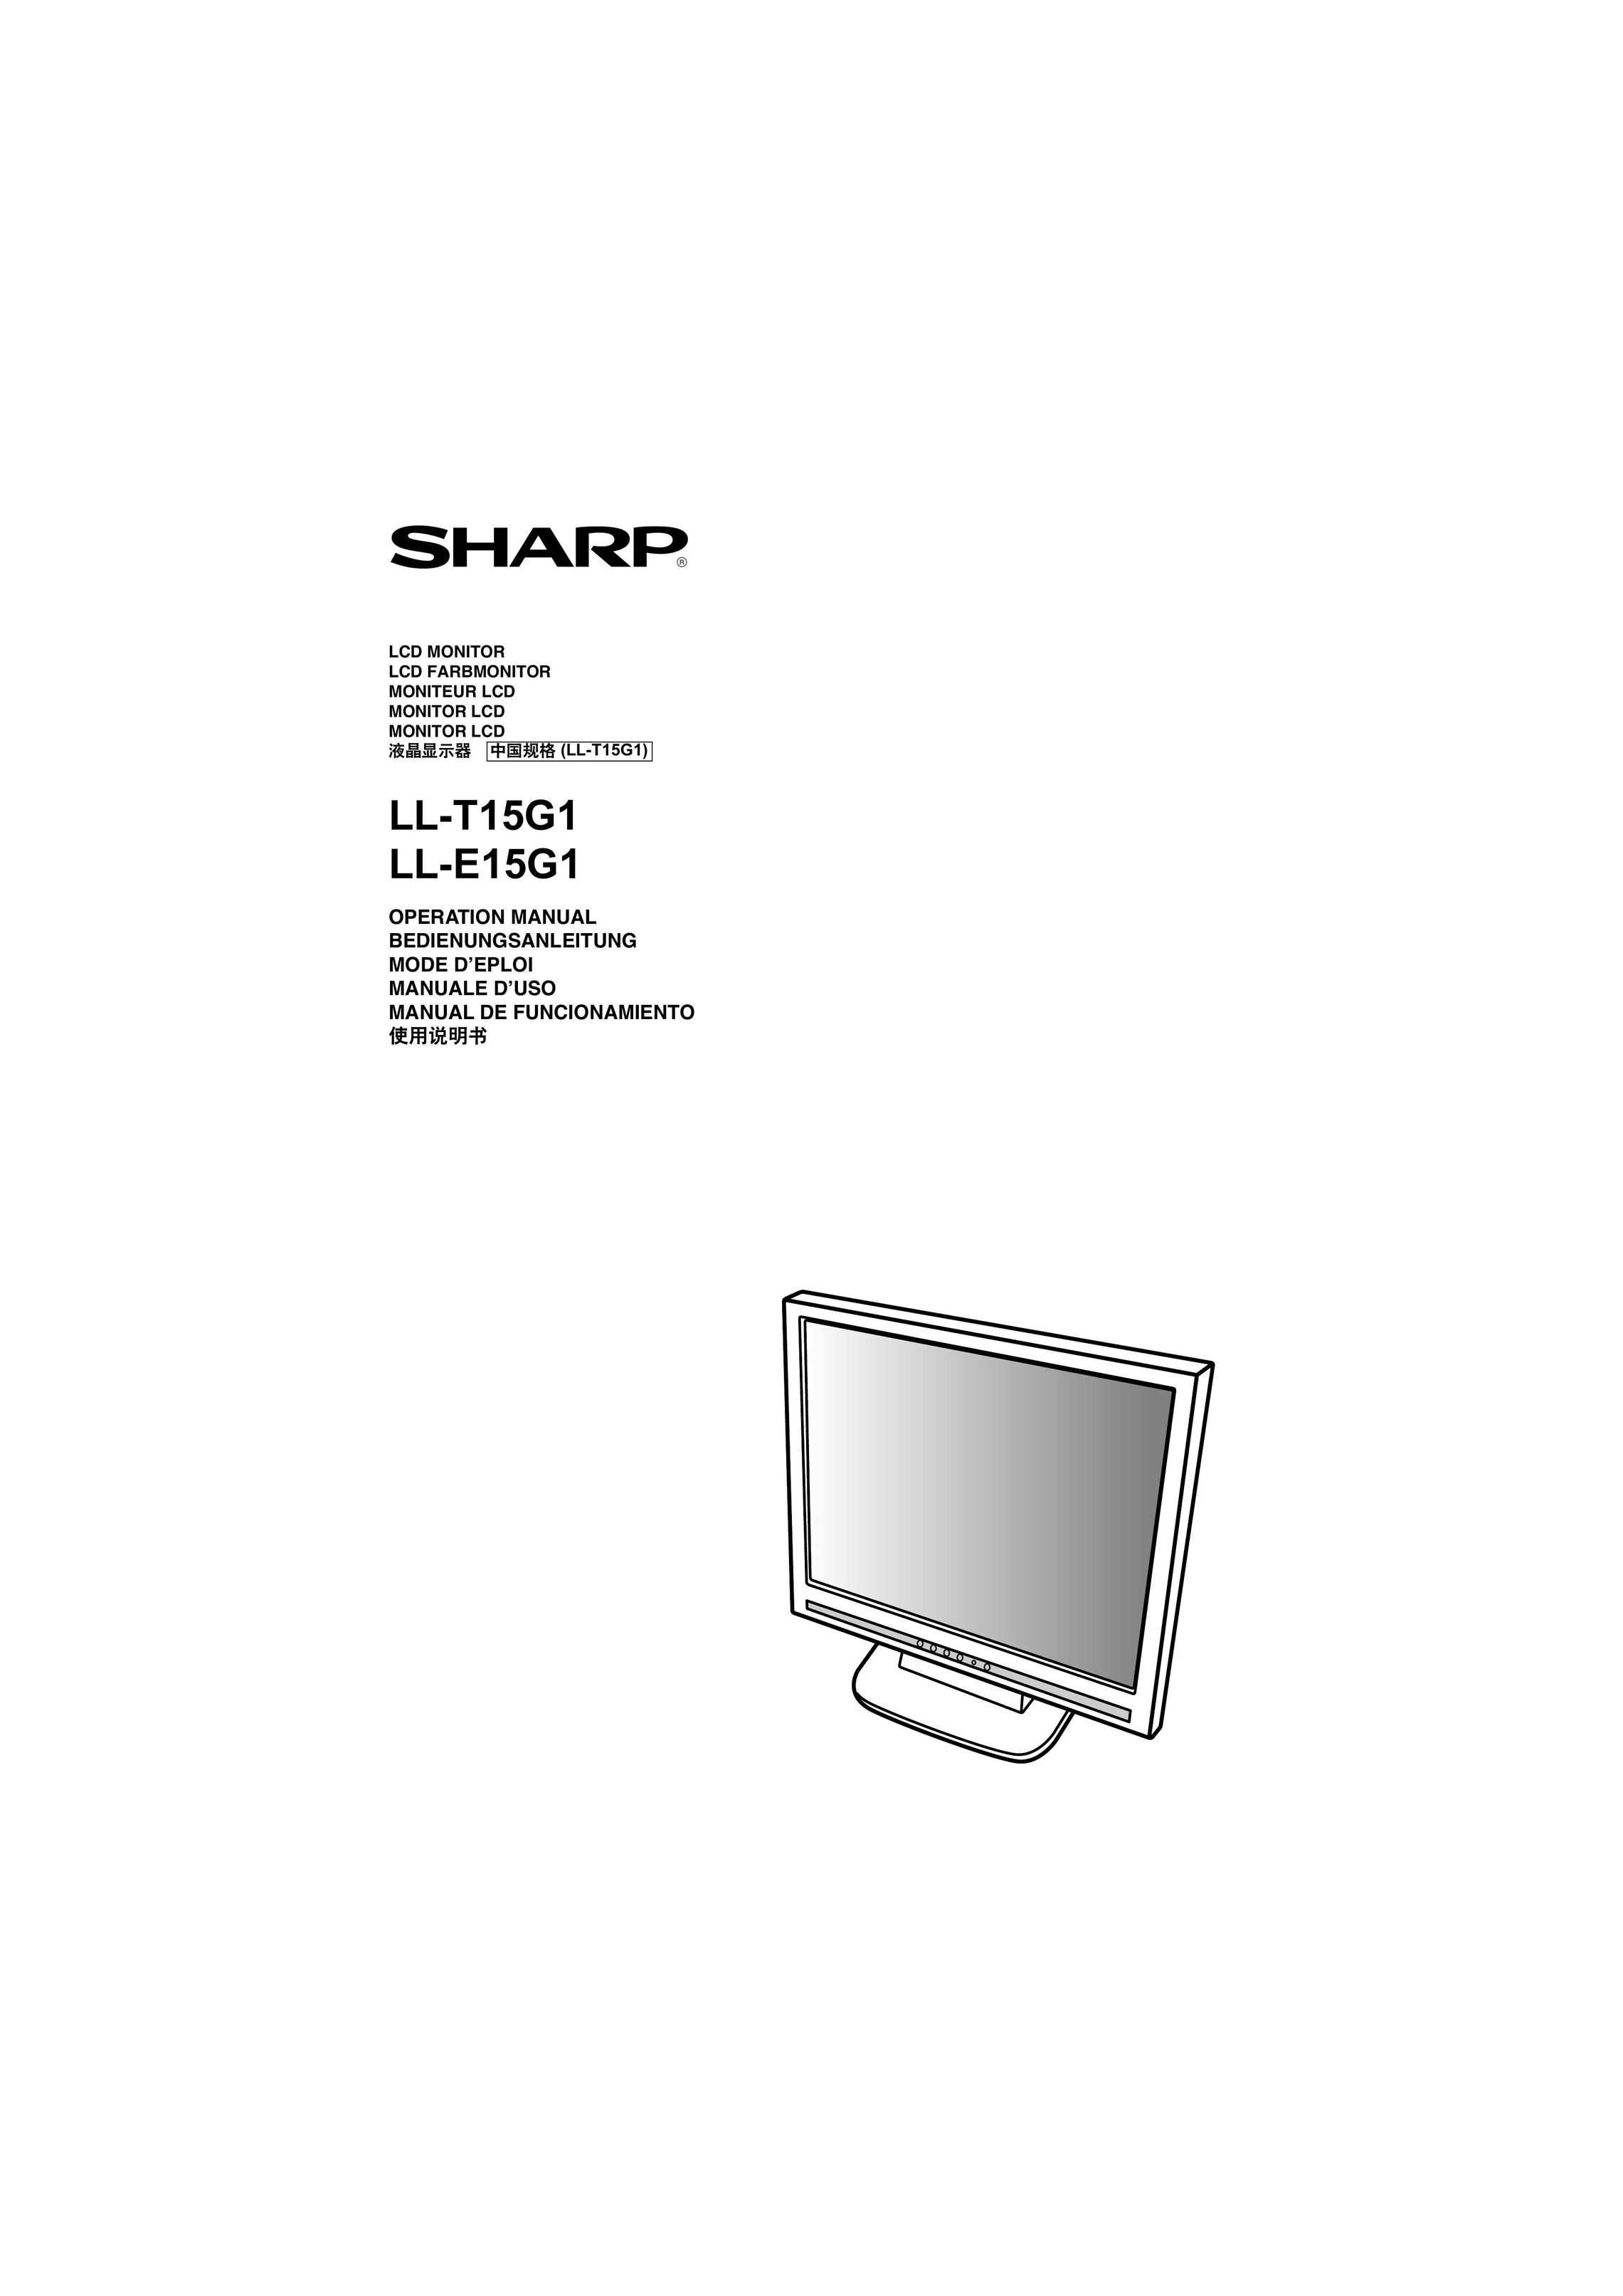 Sharp LL-E15G1 Computer Monitor User Manual